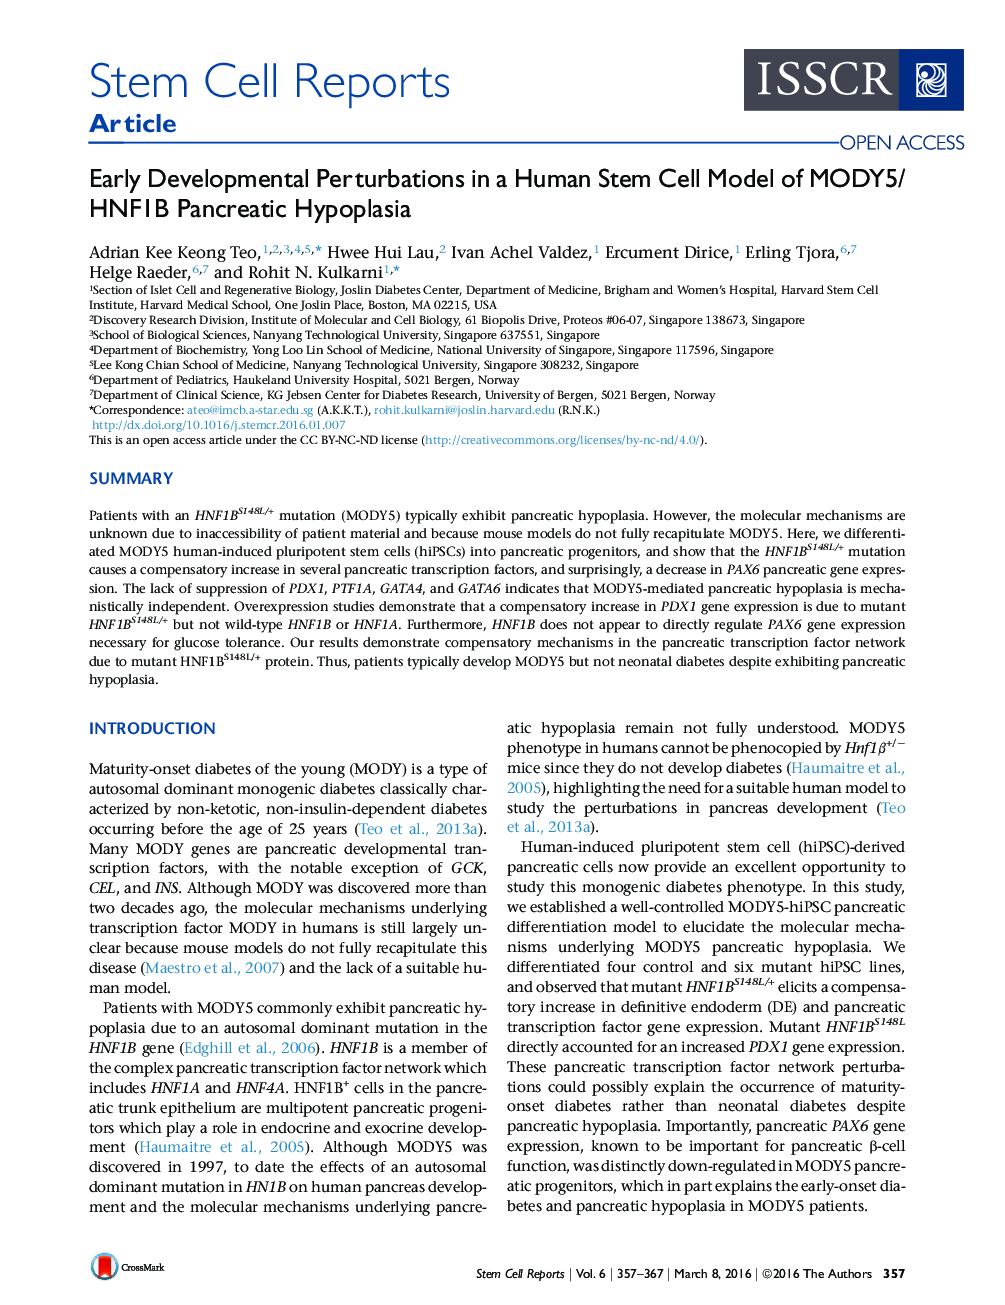 Early Developmental Perturbations in a Human Stem Cell Model of MODY5/HNF1B Pancreatic Hypoplasia 